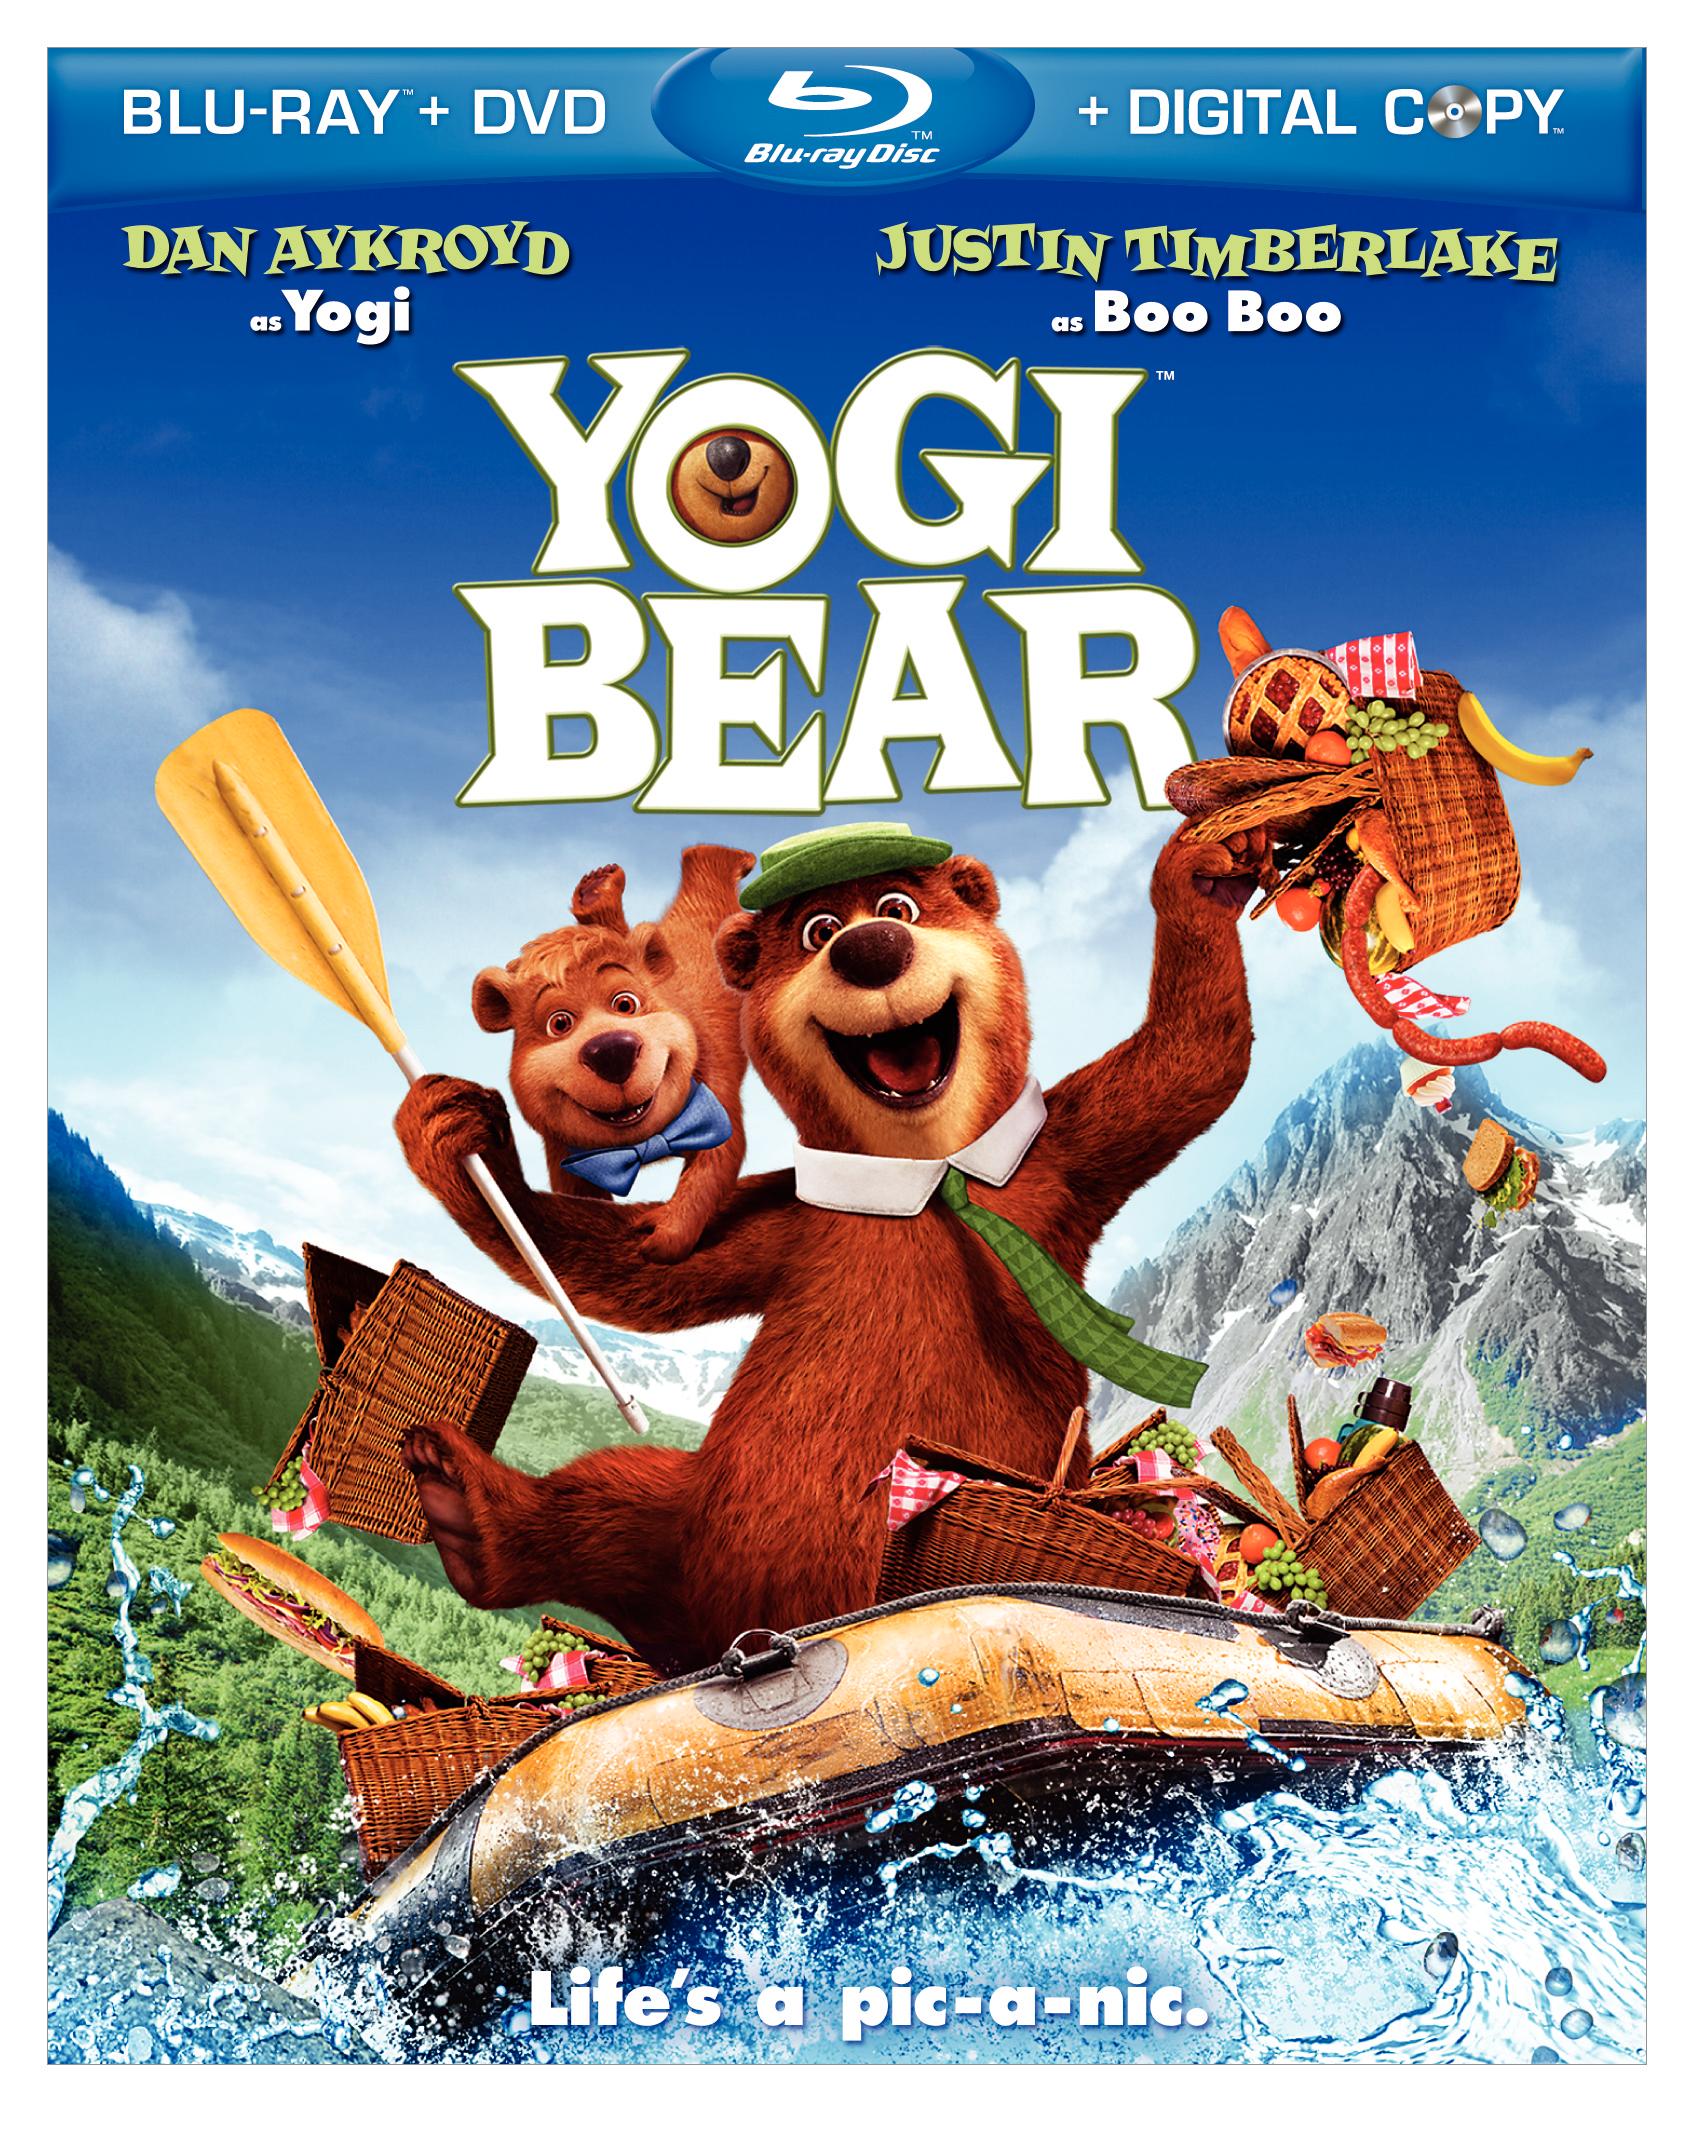 Yogi Bear | Official Movie Trailer | 2010 HD - YouTube